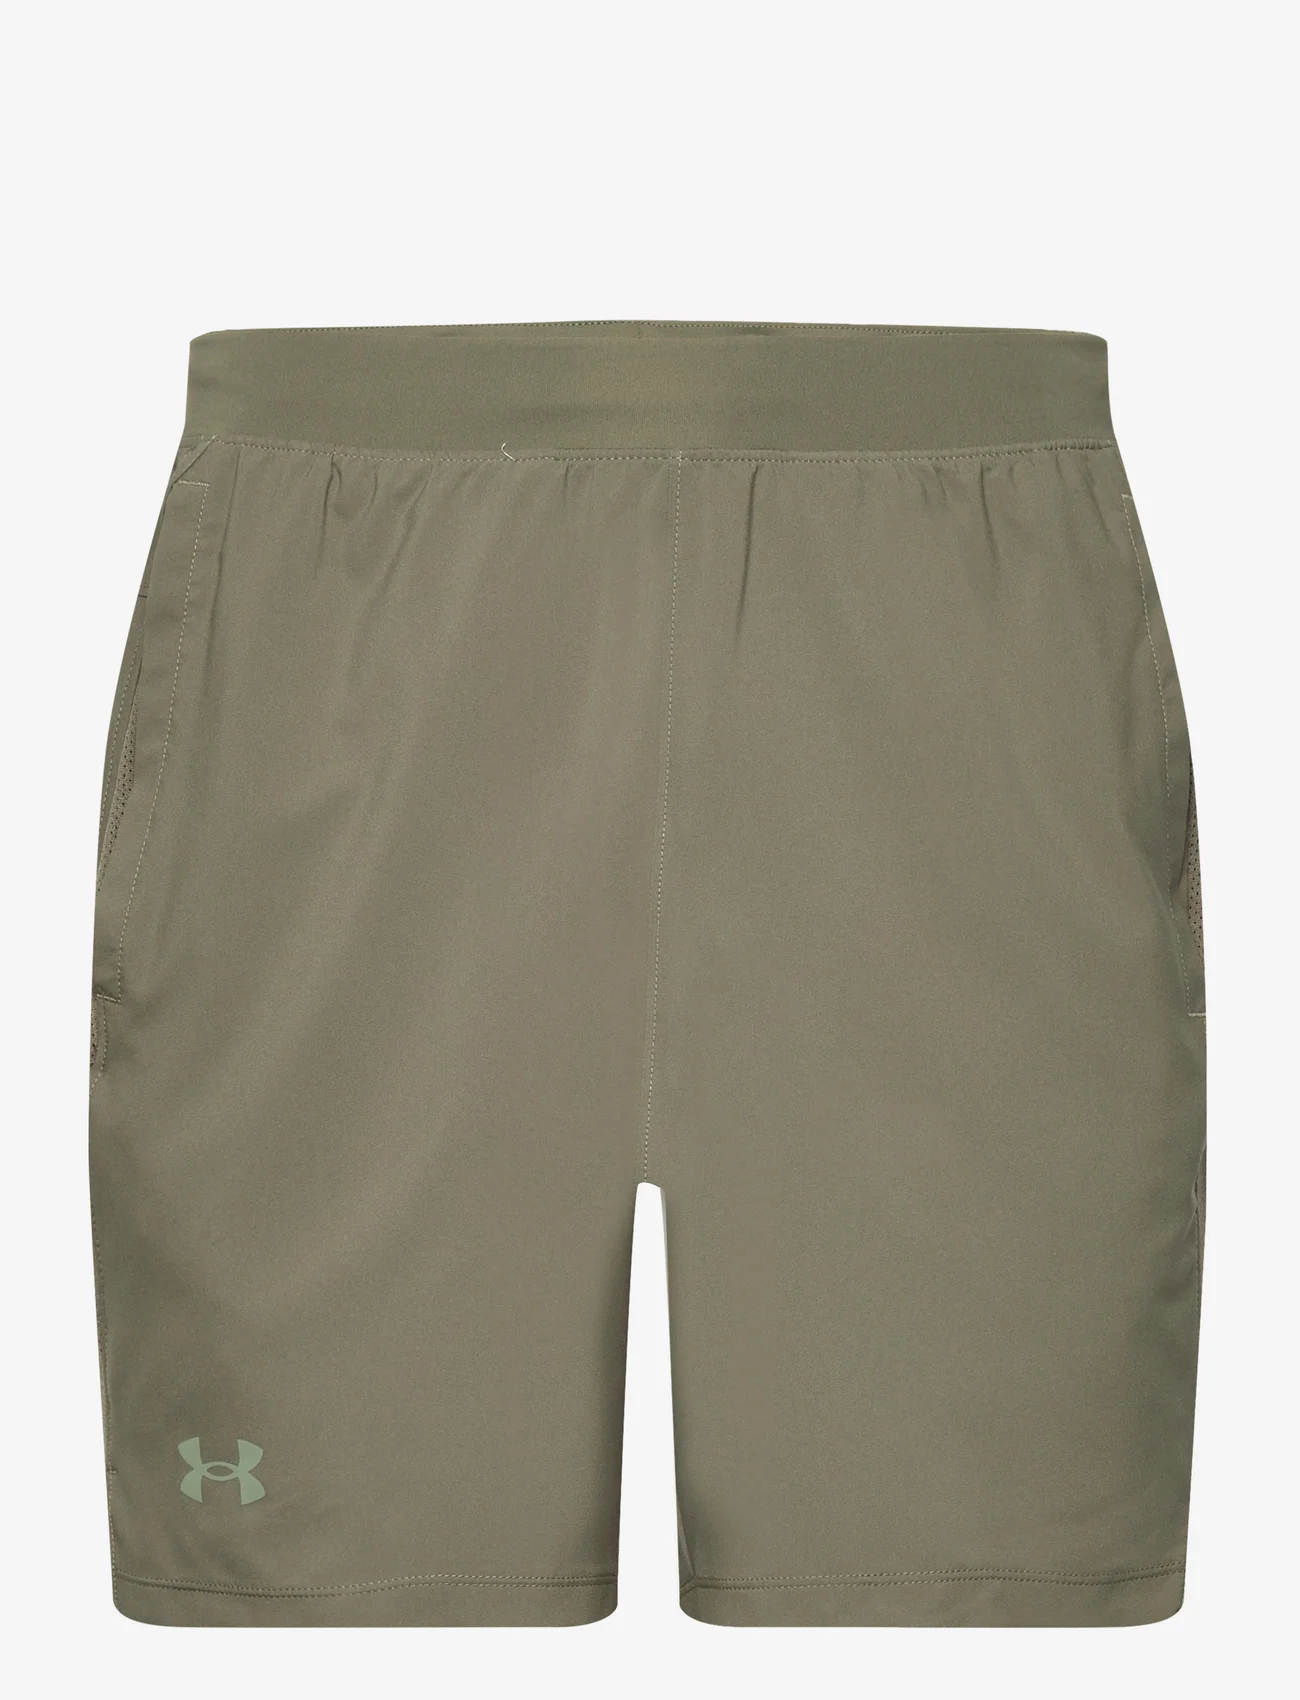 Under Armour - UA LAUNCH 7'' 2-IN-1 SHORT - training shorts - marine od green - 0